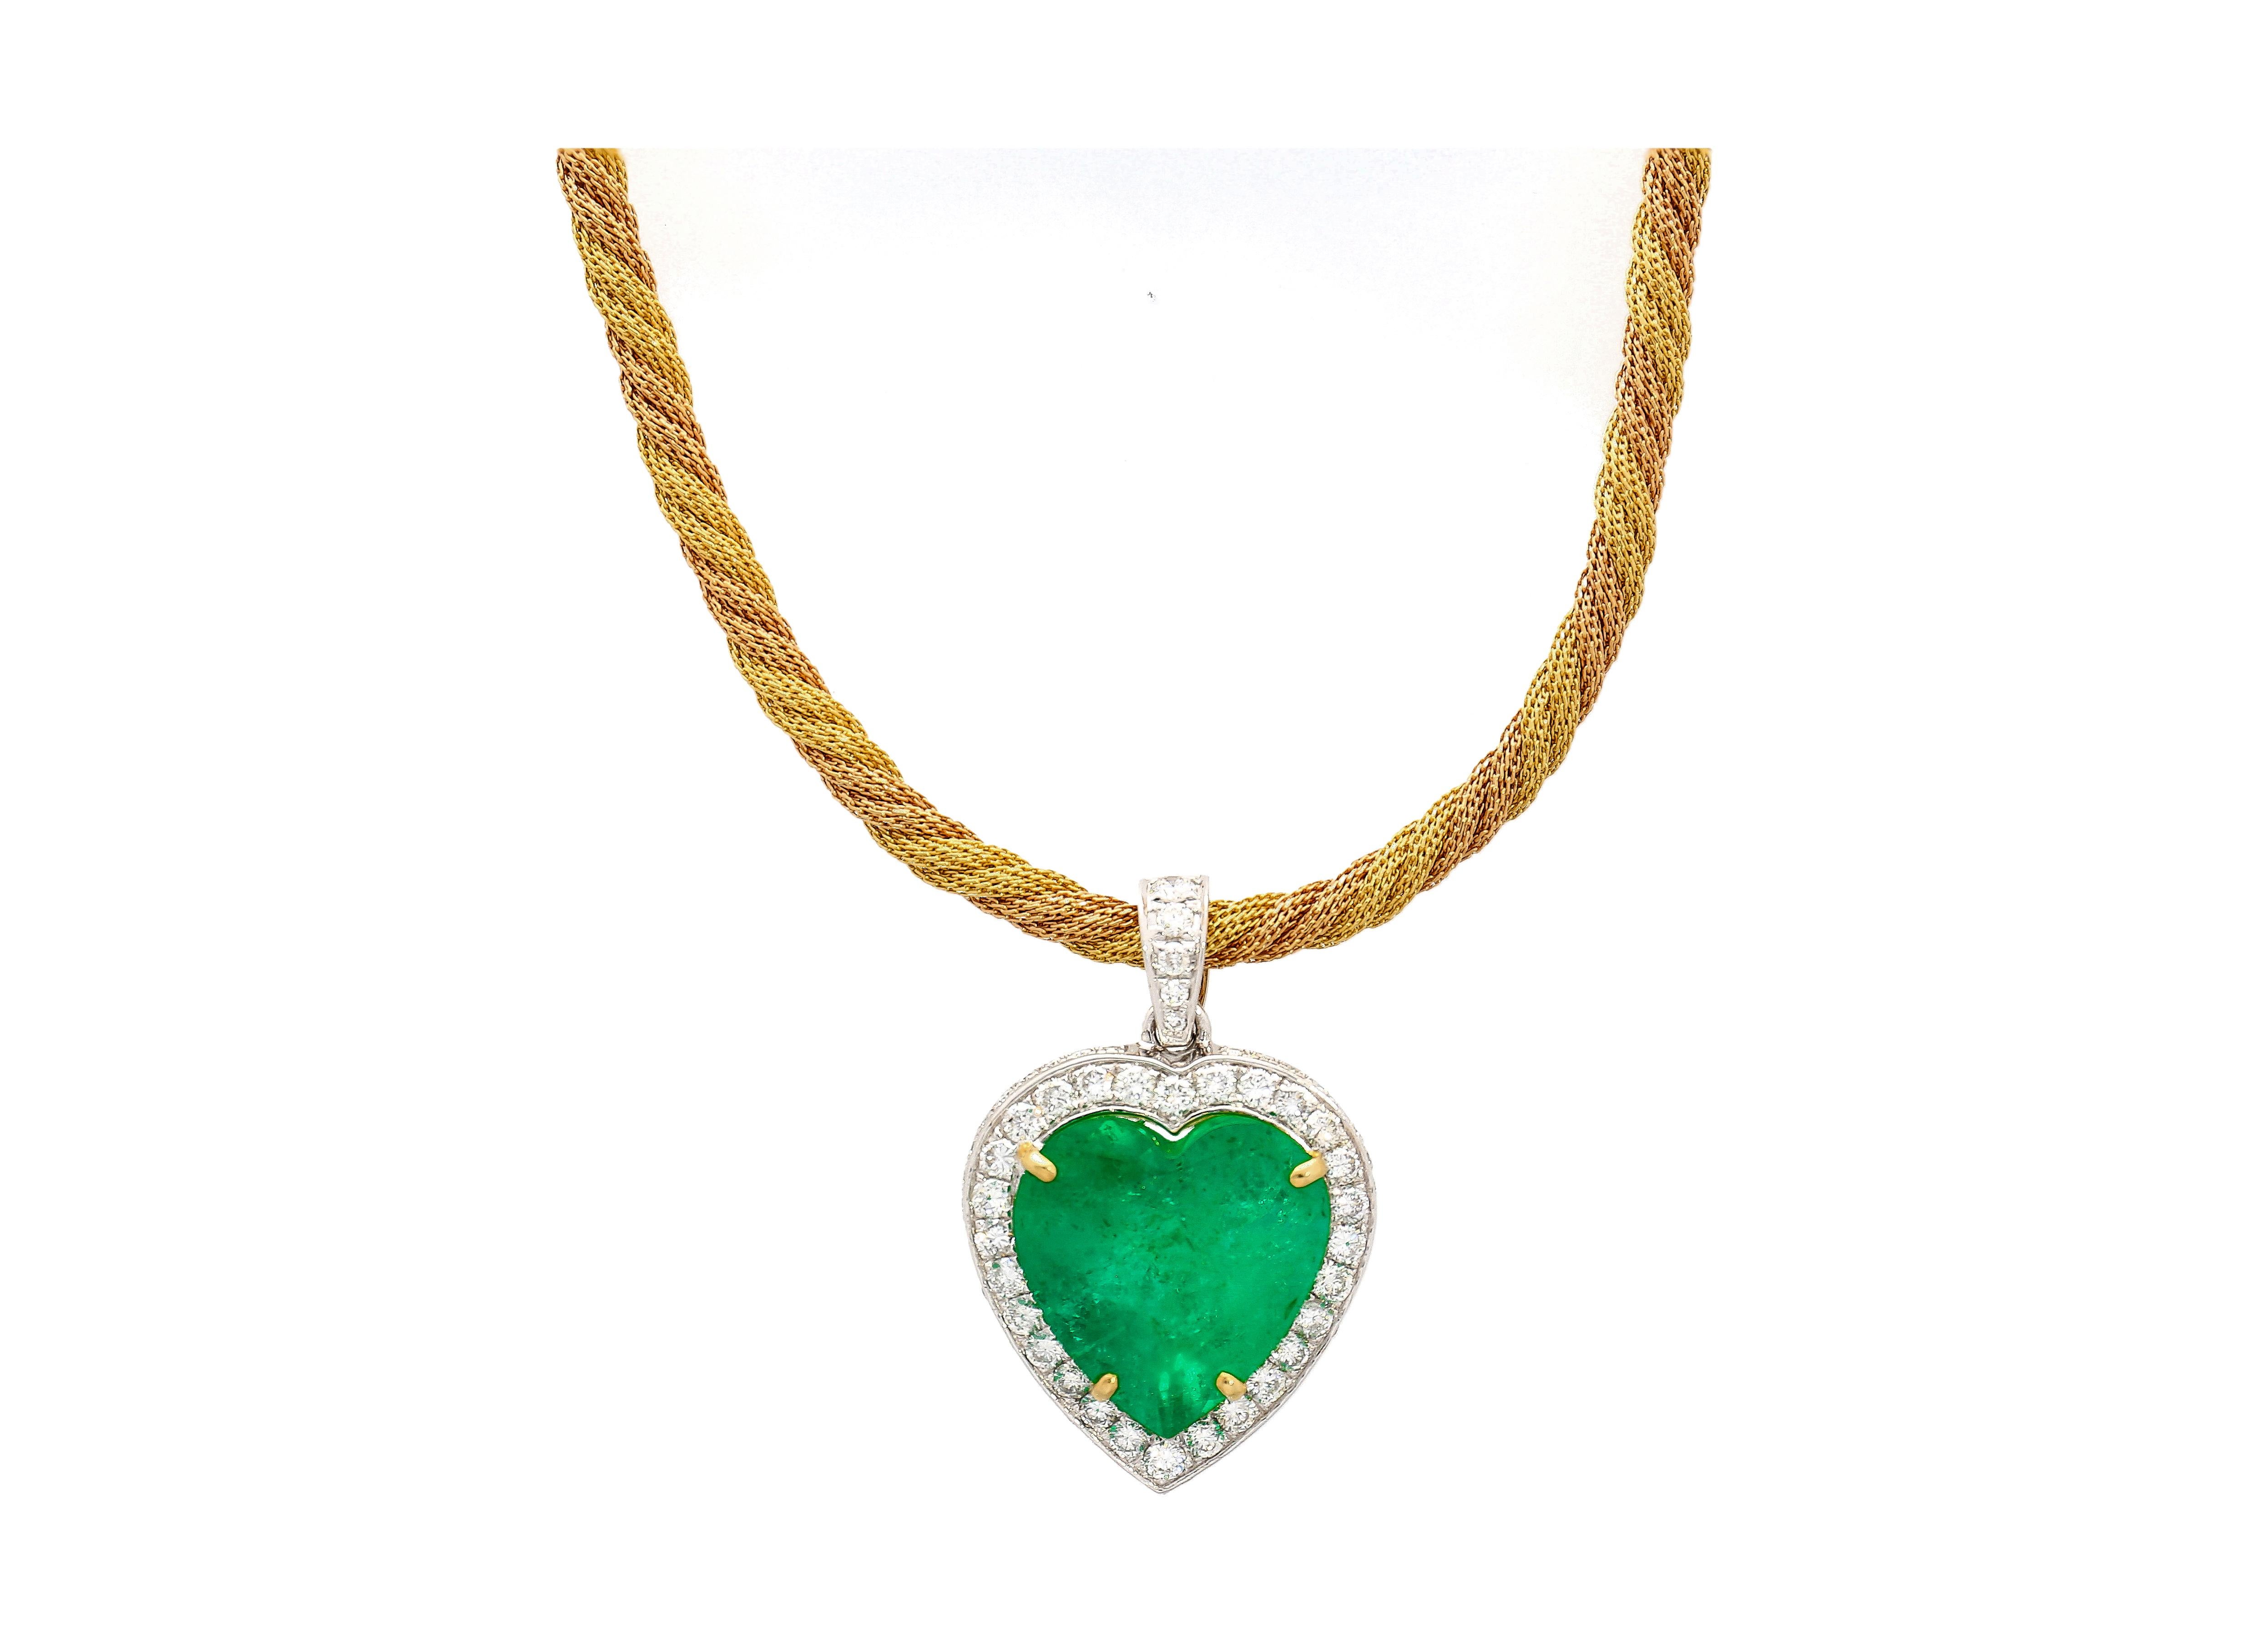 Jewelry Details:

Item Type: Pendant
Metal Type: 18K White Gold
Gemstones: Green Emerald, Diamond
Weight: 16.54 grams (Total Weight)

Center Stone Details:
Gemstone: Green Emerald
Carat: 43.99 Carats
Emerald Measurements: 24.97 x 24.34 x 15.24